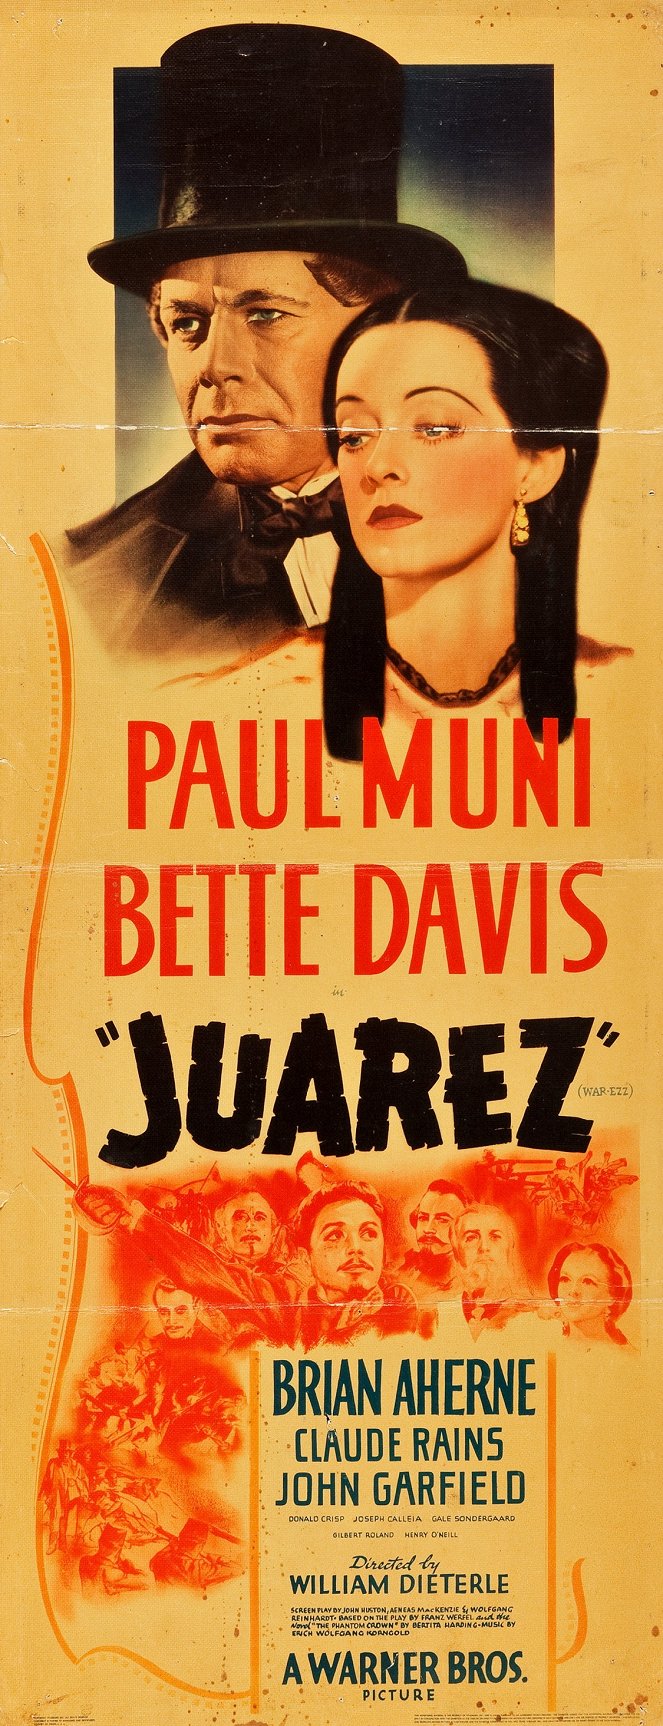 Juarez - Posters